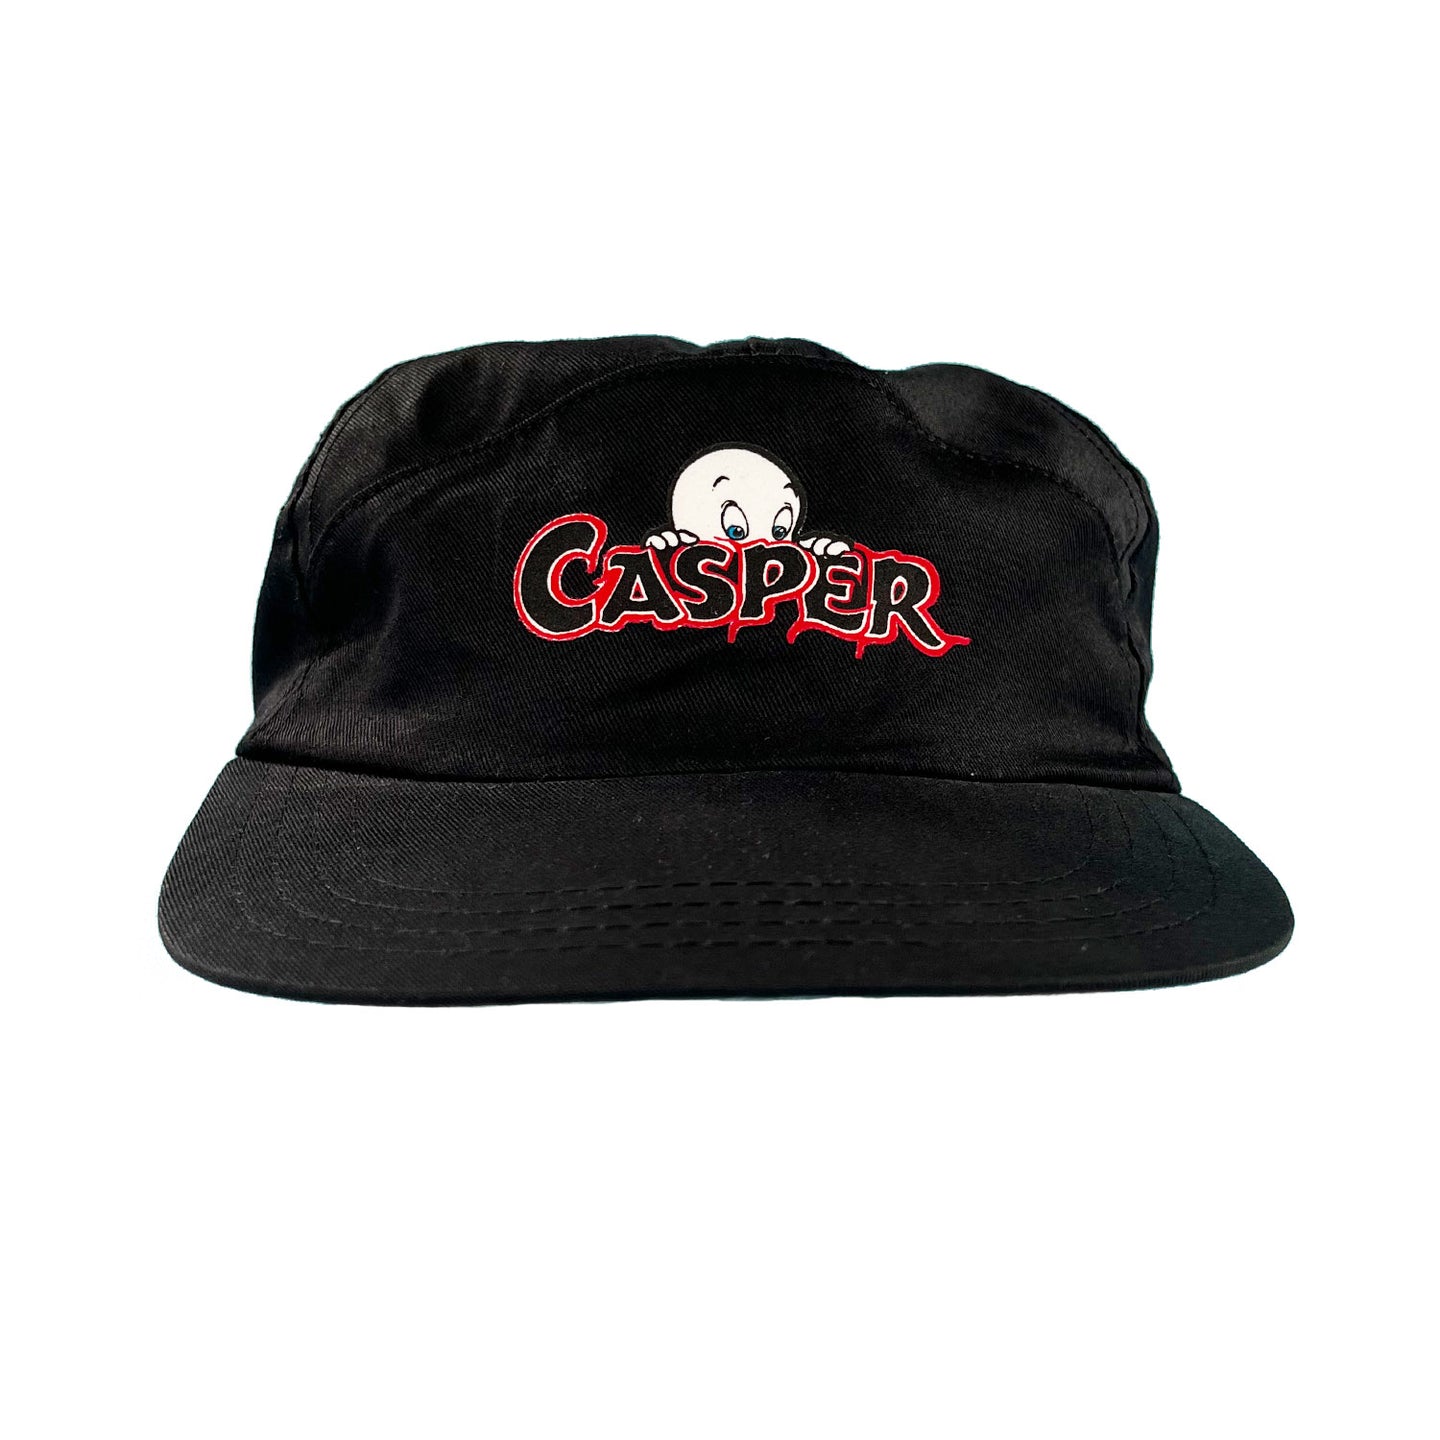 Vintage Casper the ghost hat